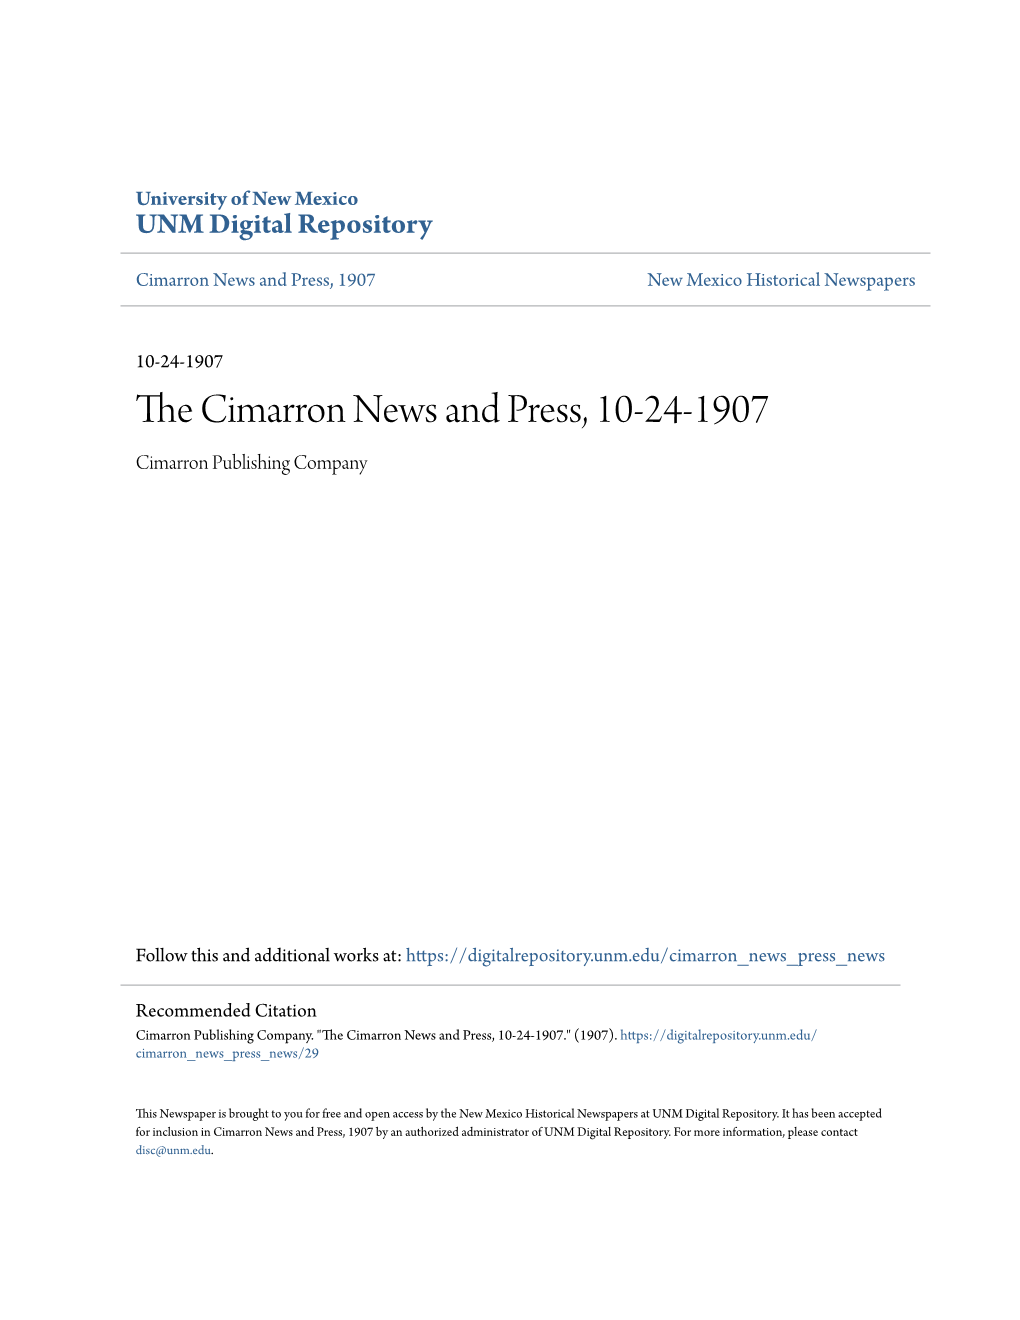 The Cimarron News and Press, 10-24-1907